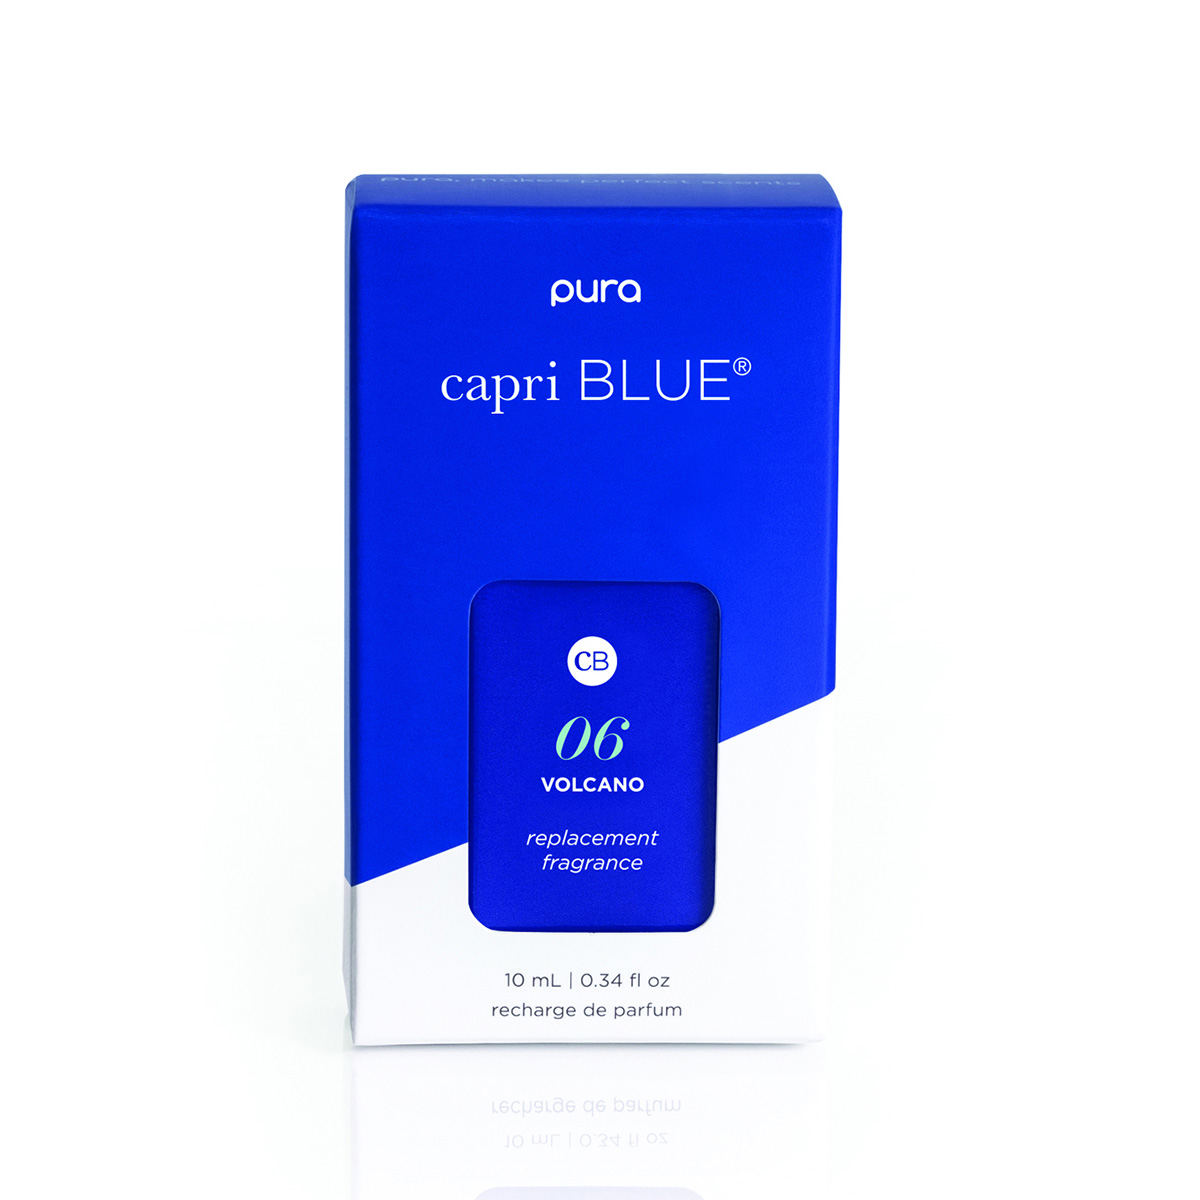 capri BLUE x Pura Fragrance Refill